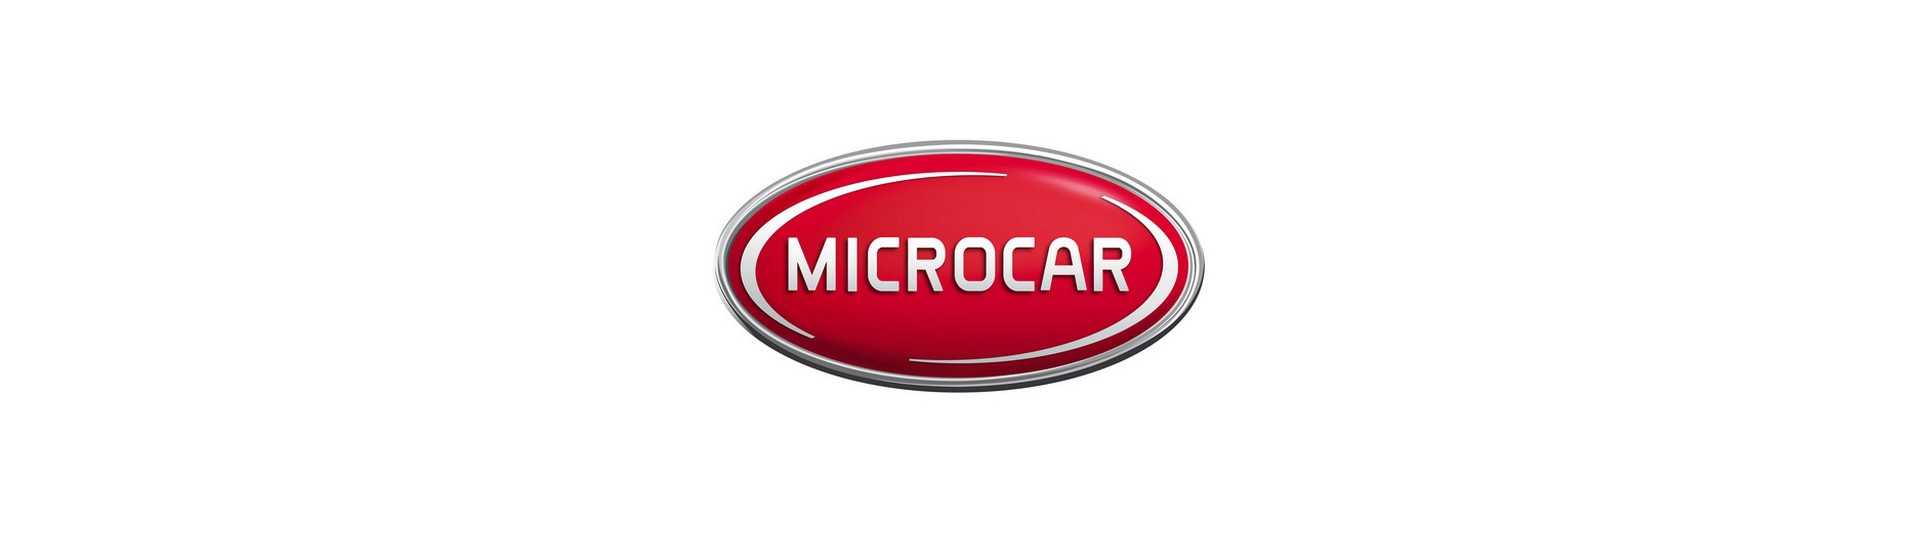 satunnaiset osat Microcar au meilleur prix